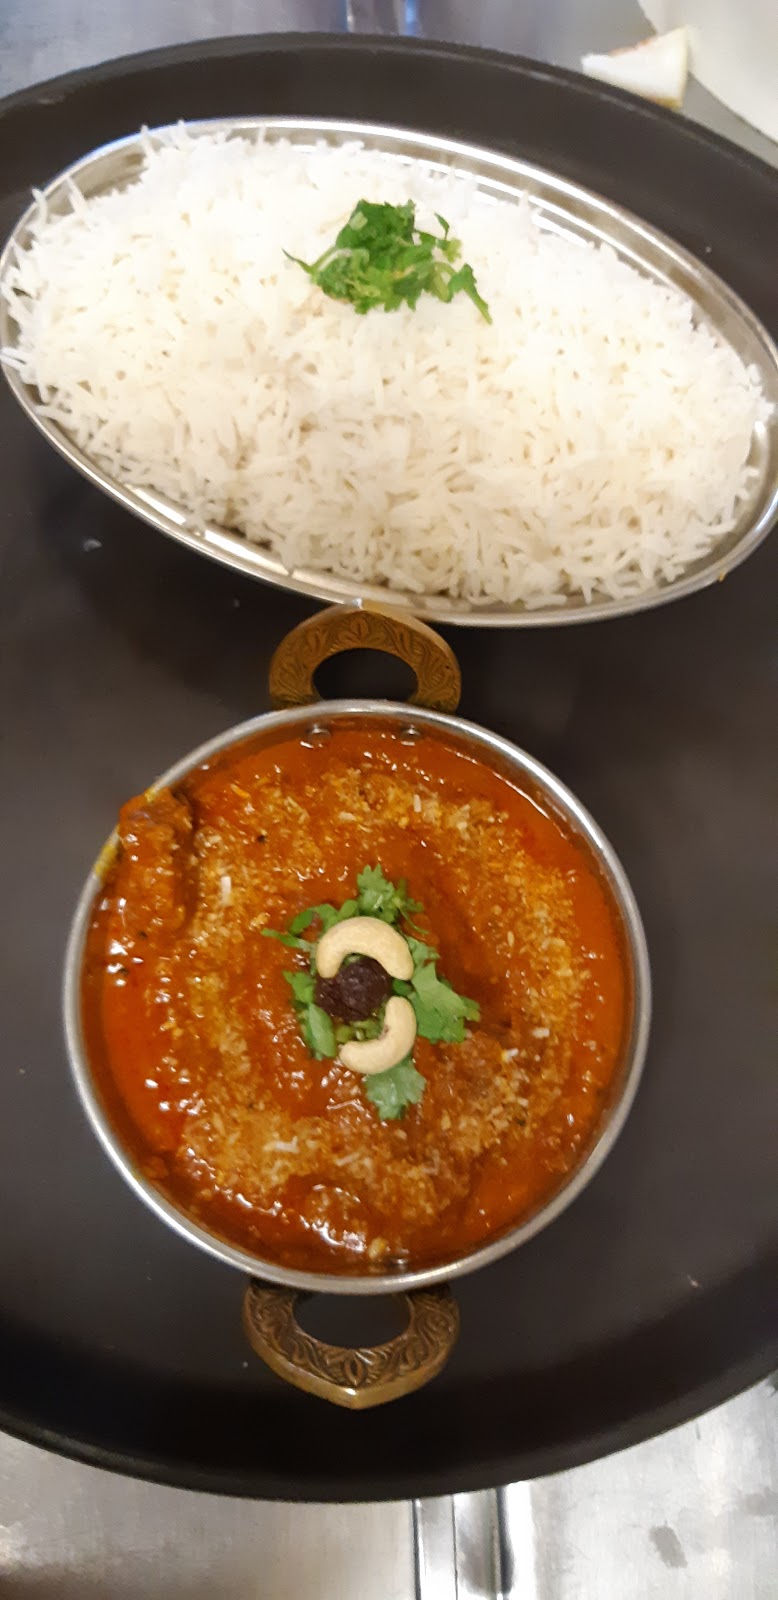 Bukhara Indian Tandoori Restaurant | restaurant | 2/9 Main St, Upwey VIC 3158, Australia | 0397526688 OR +61 3 9752 6688